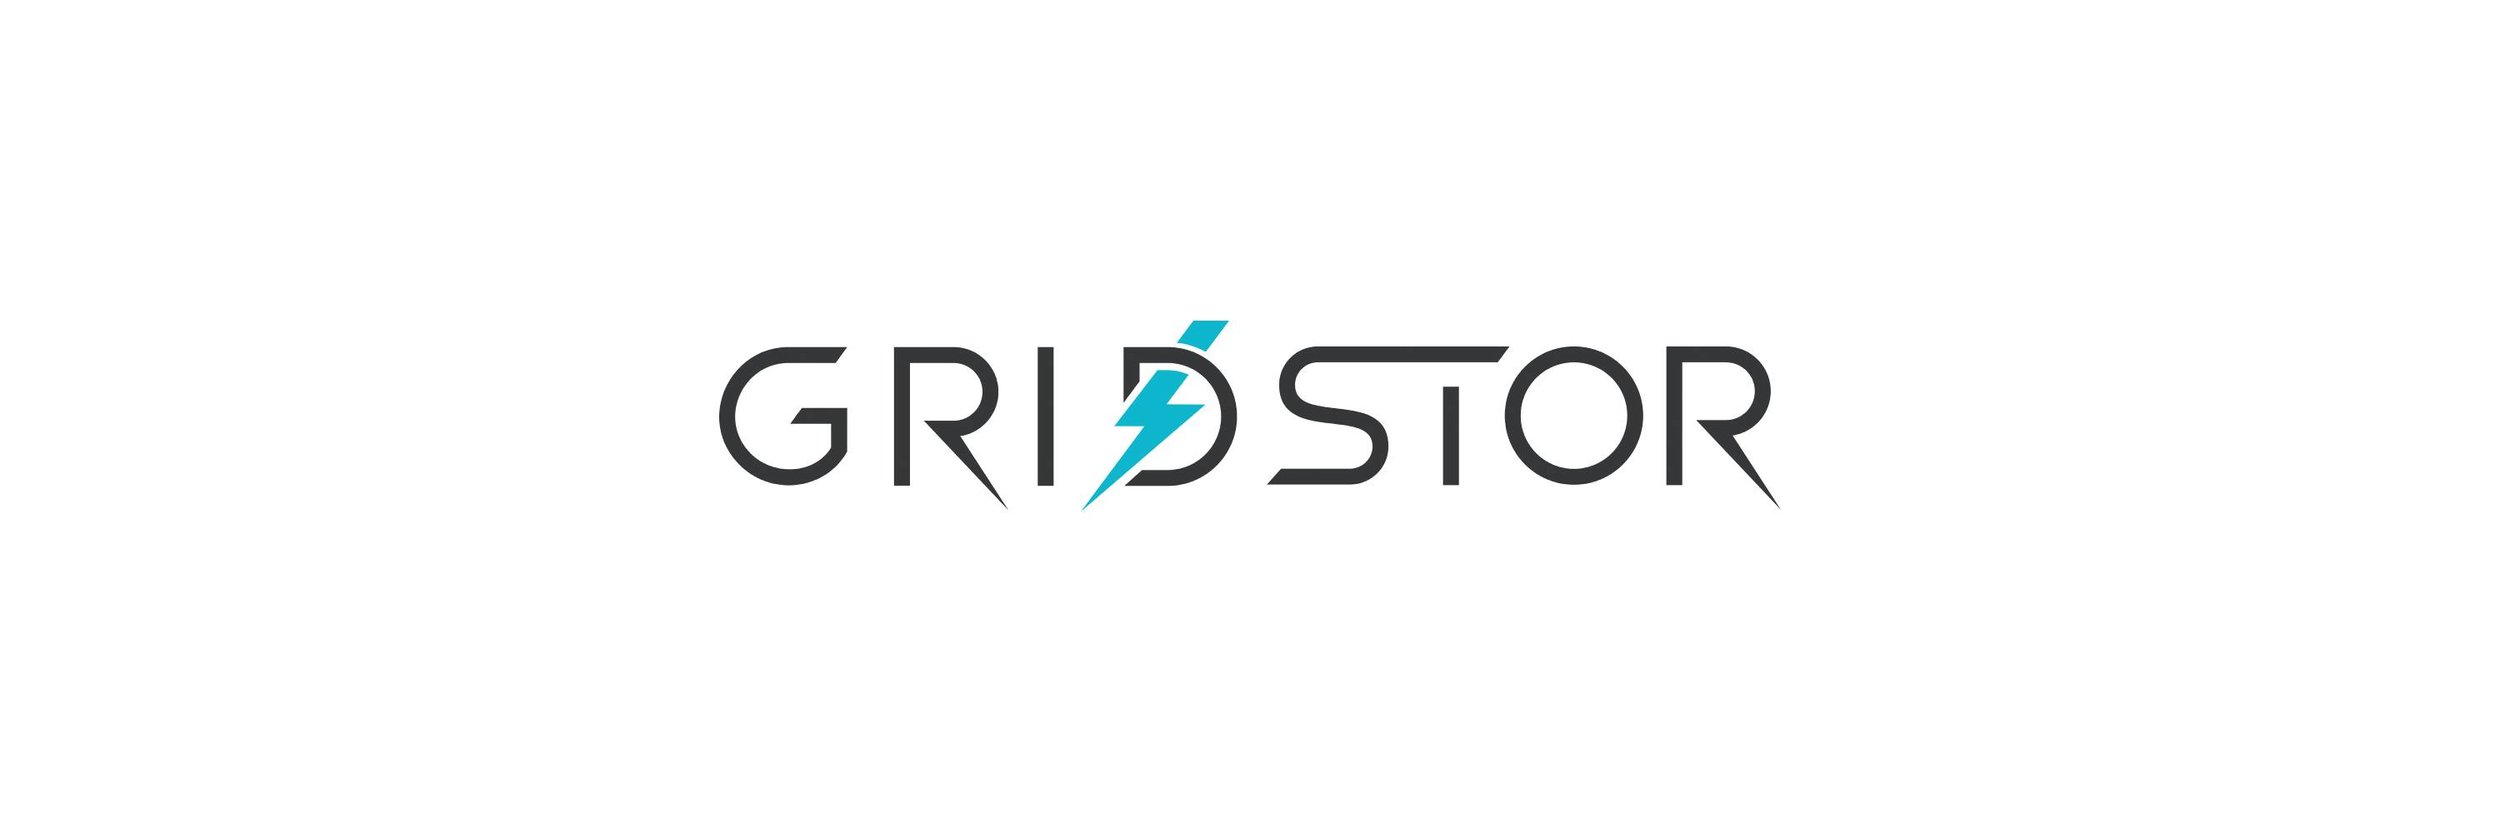 GridStor